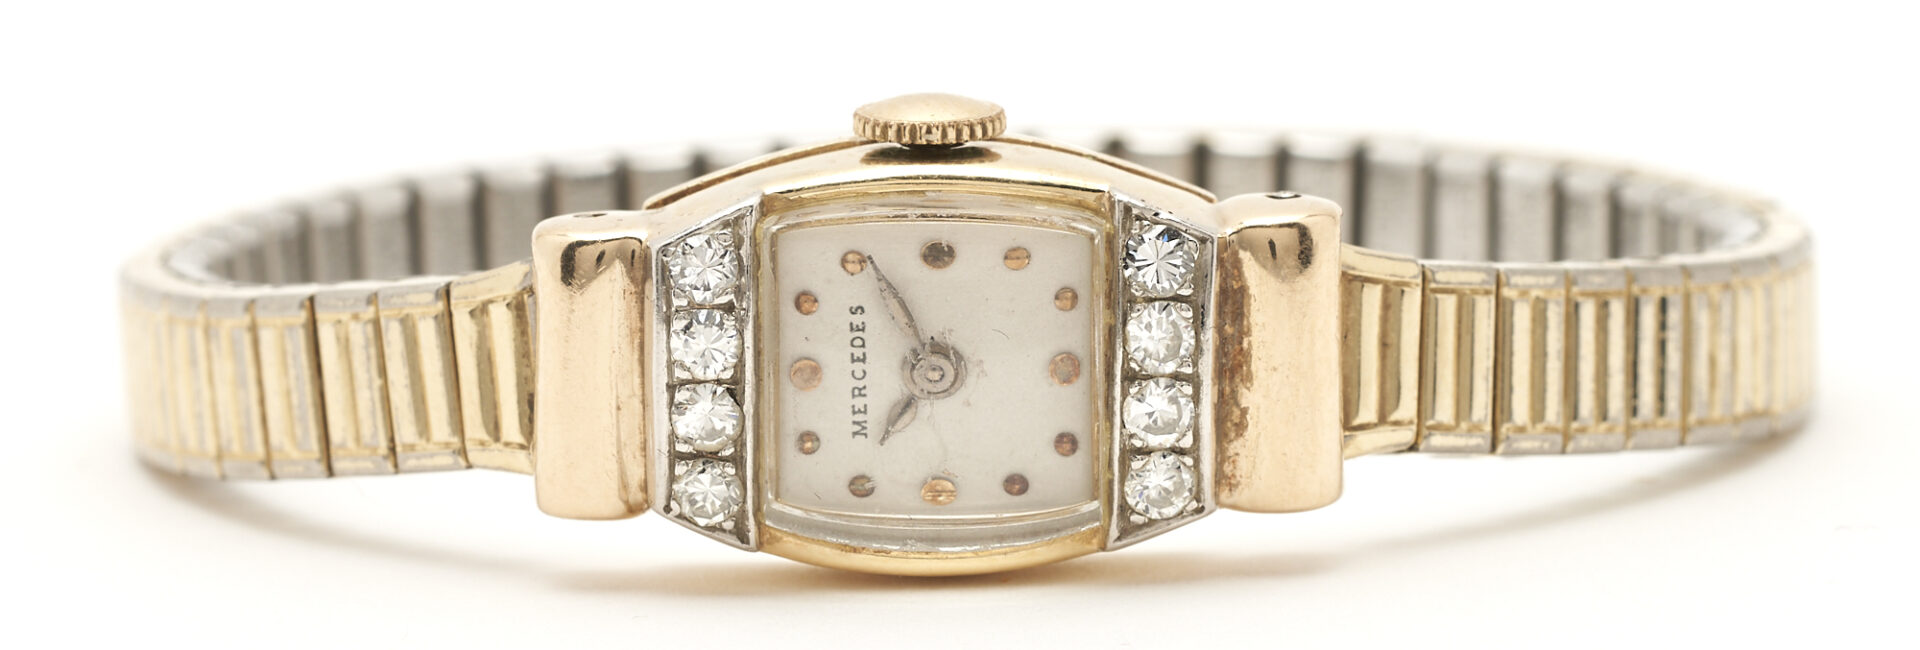 Lot 760: Ladies' 14K Gold & Diamond Mercedes Wrist Watch